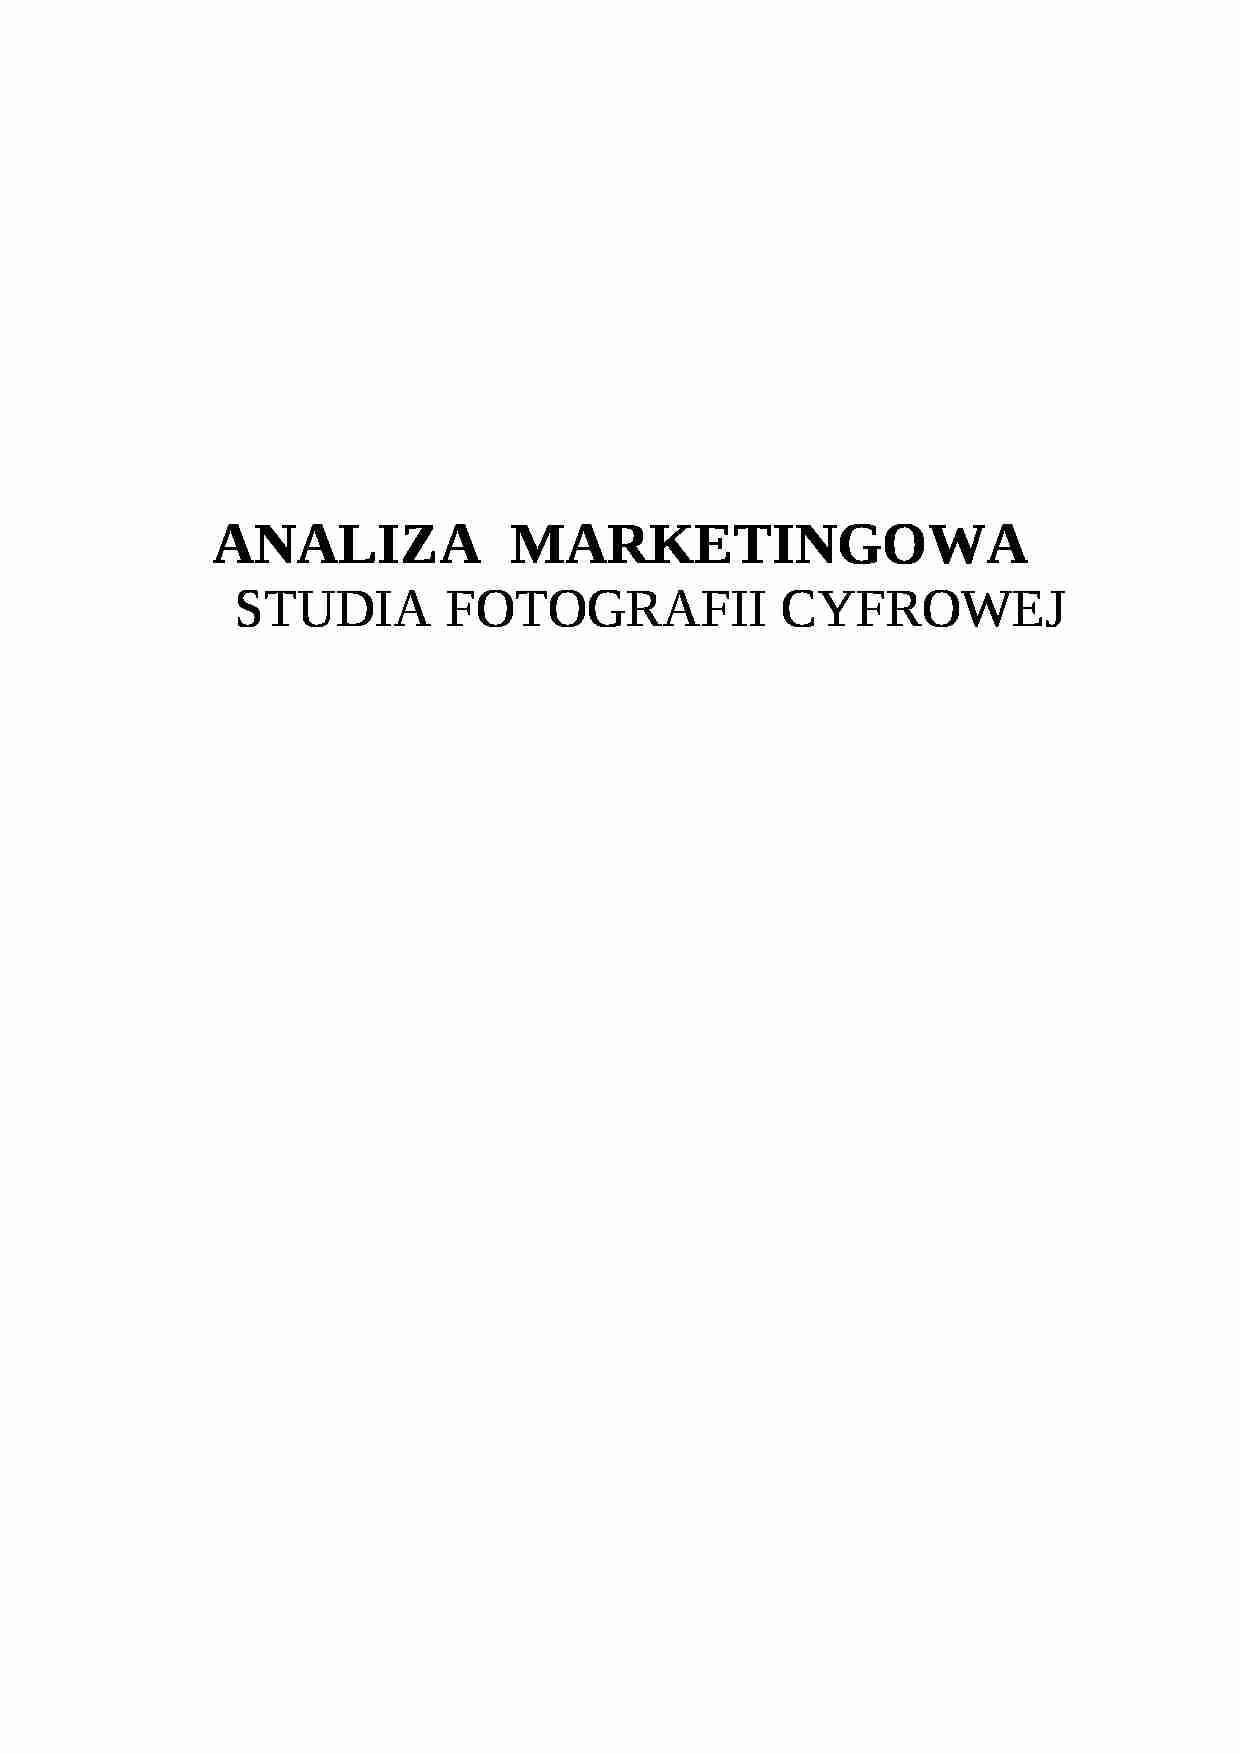 Analiza marketingowa studia fotografii - strona 1